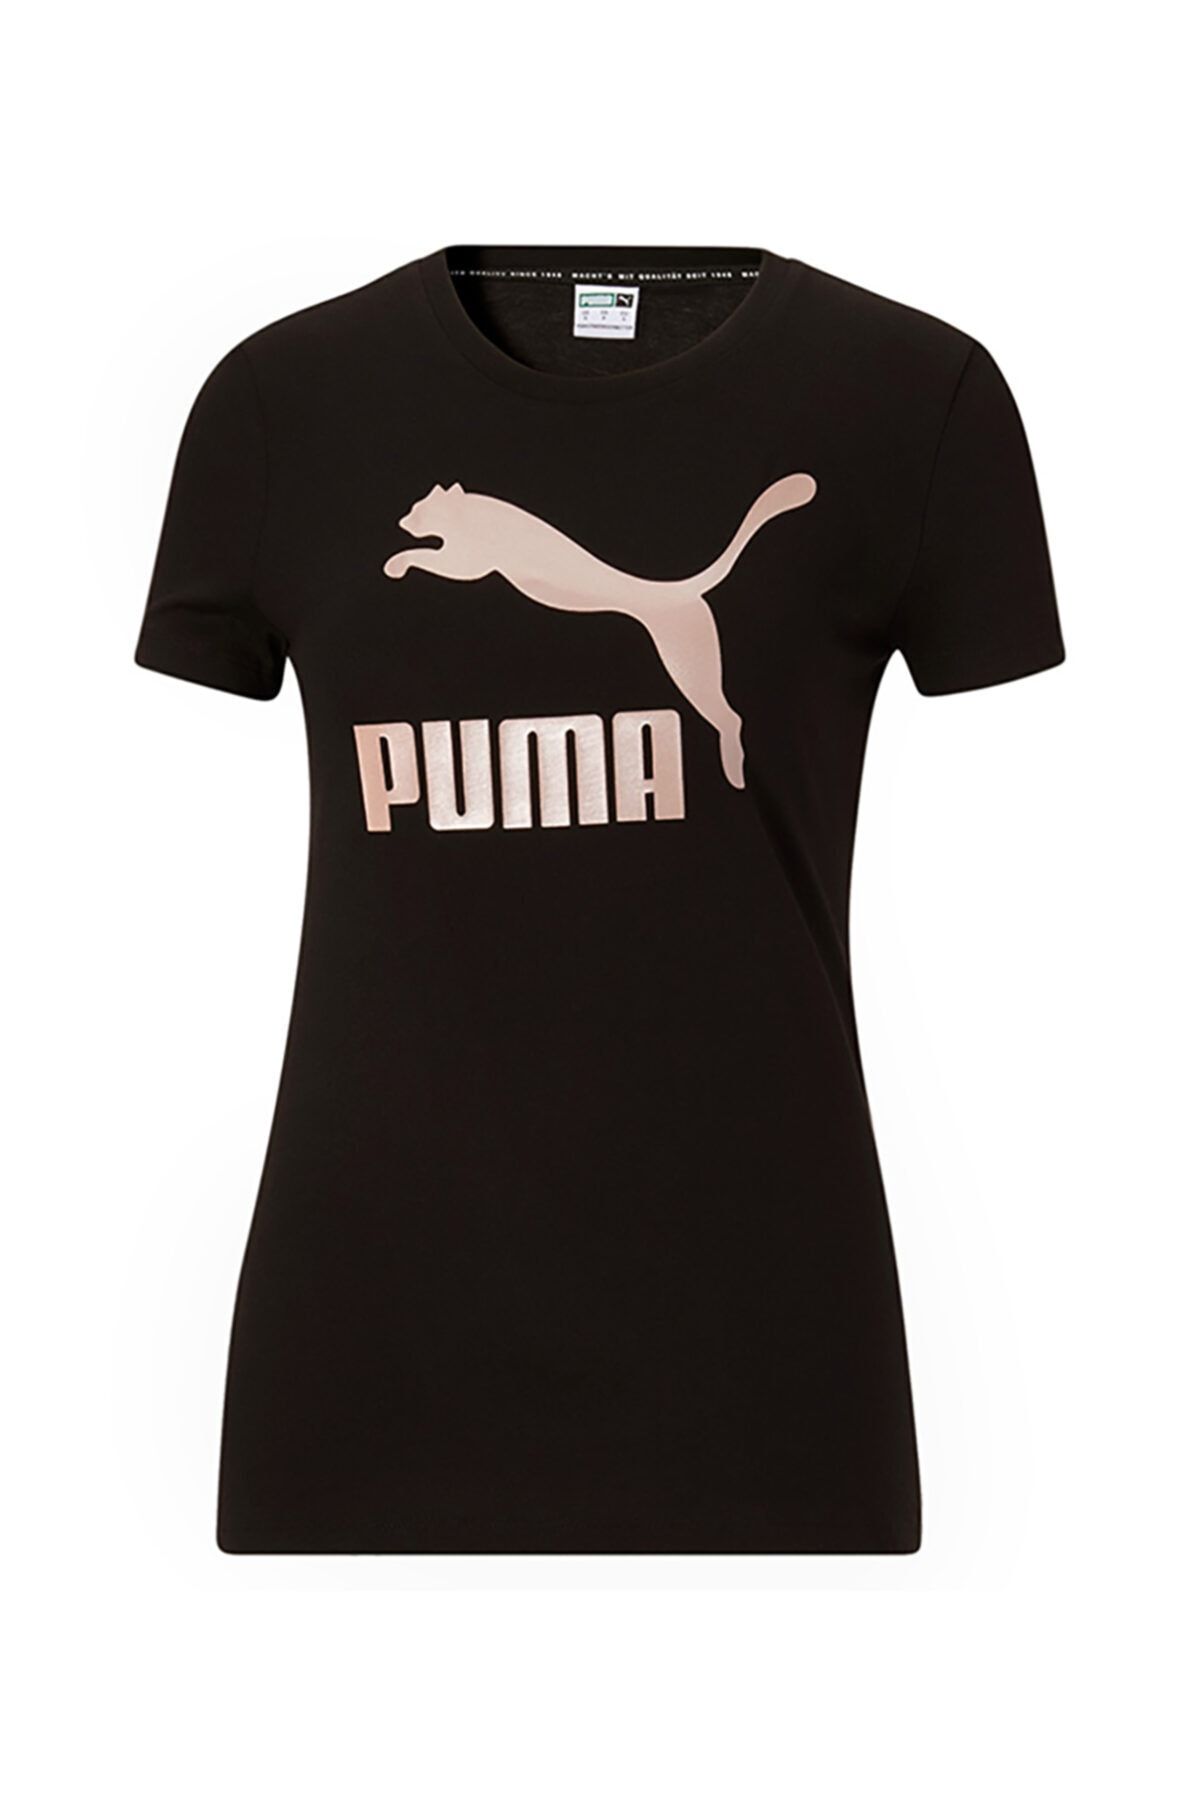 Puma Classics Metallic Logo Women's Short Sleeve T-shirt Black - Trendyol